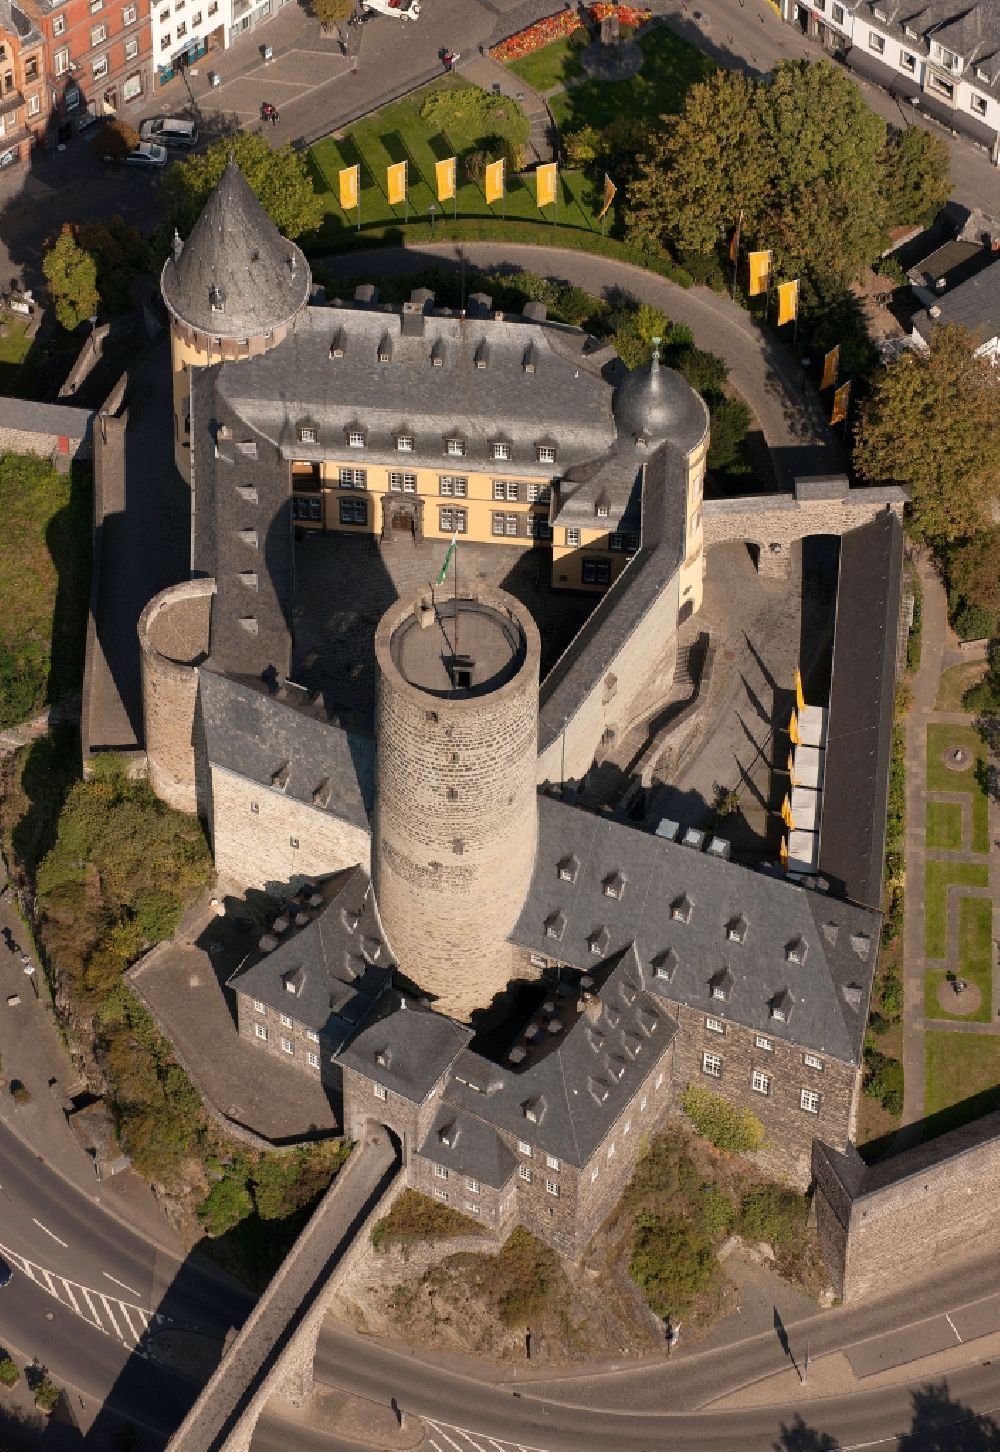 Mayen from above - Genoveva Castle - landmark of the city of Mayen in Rhineland-Palatinate